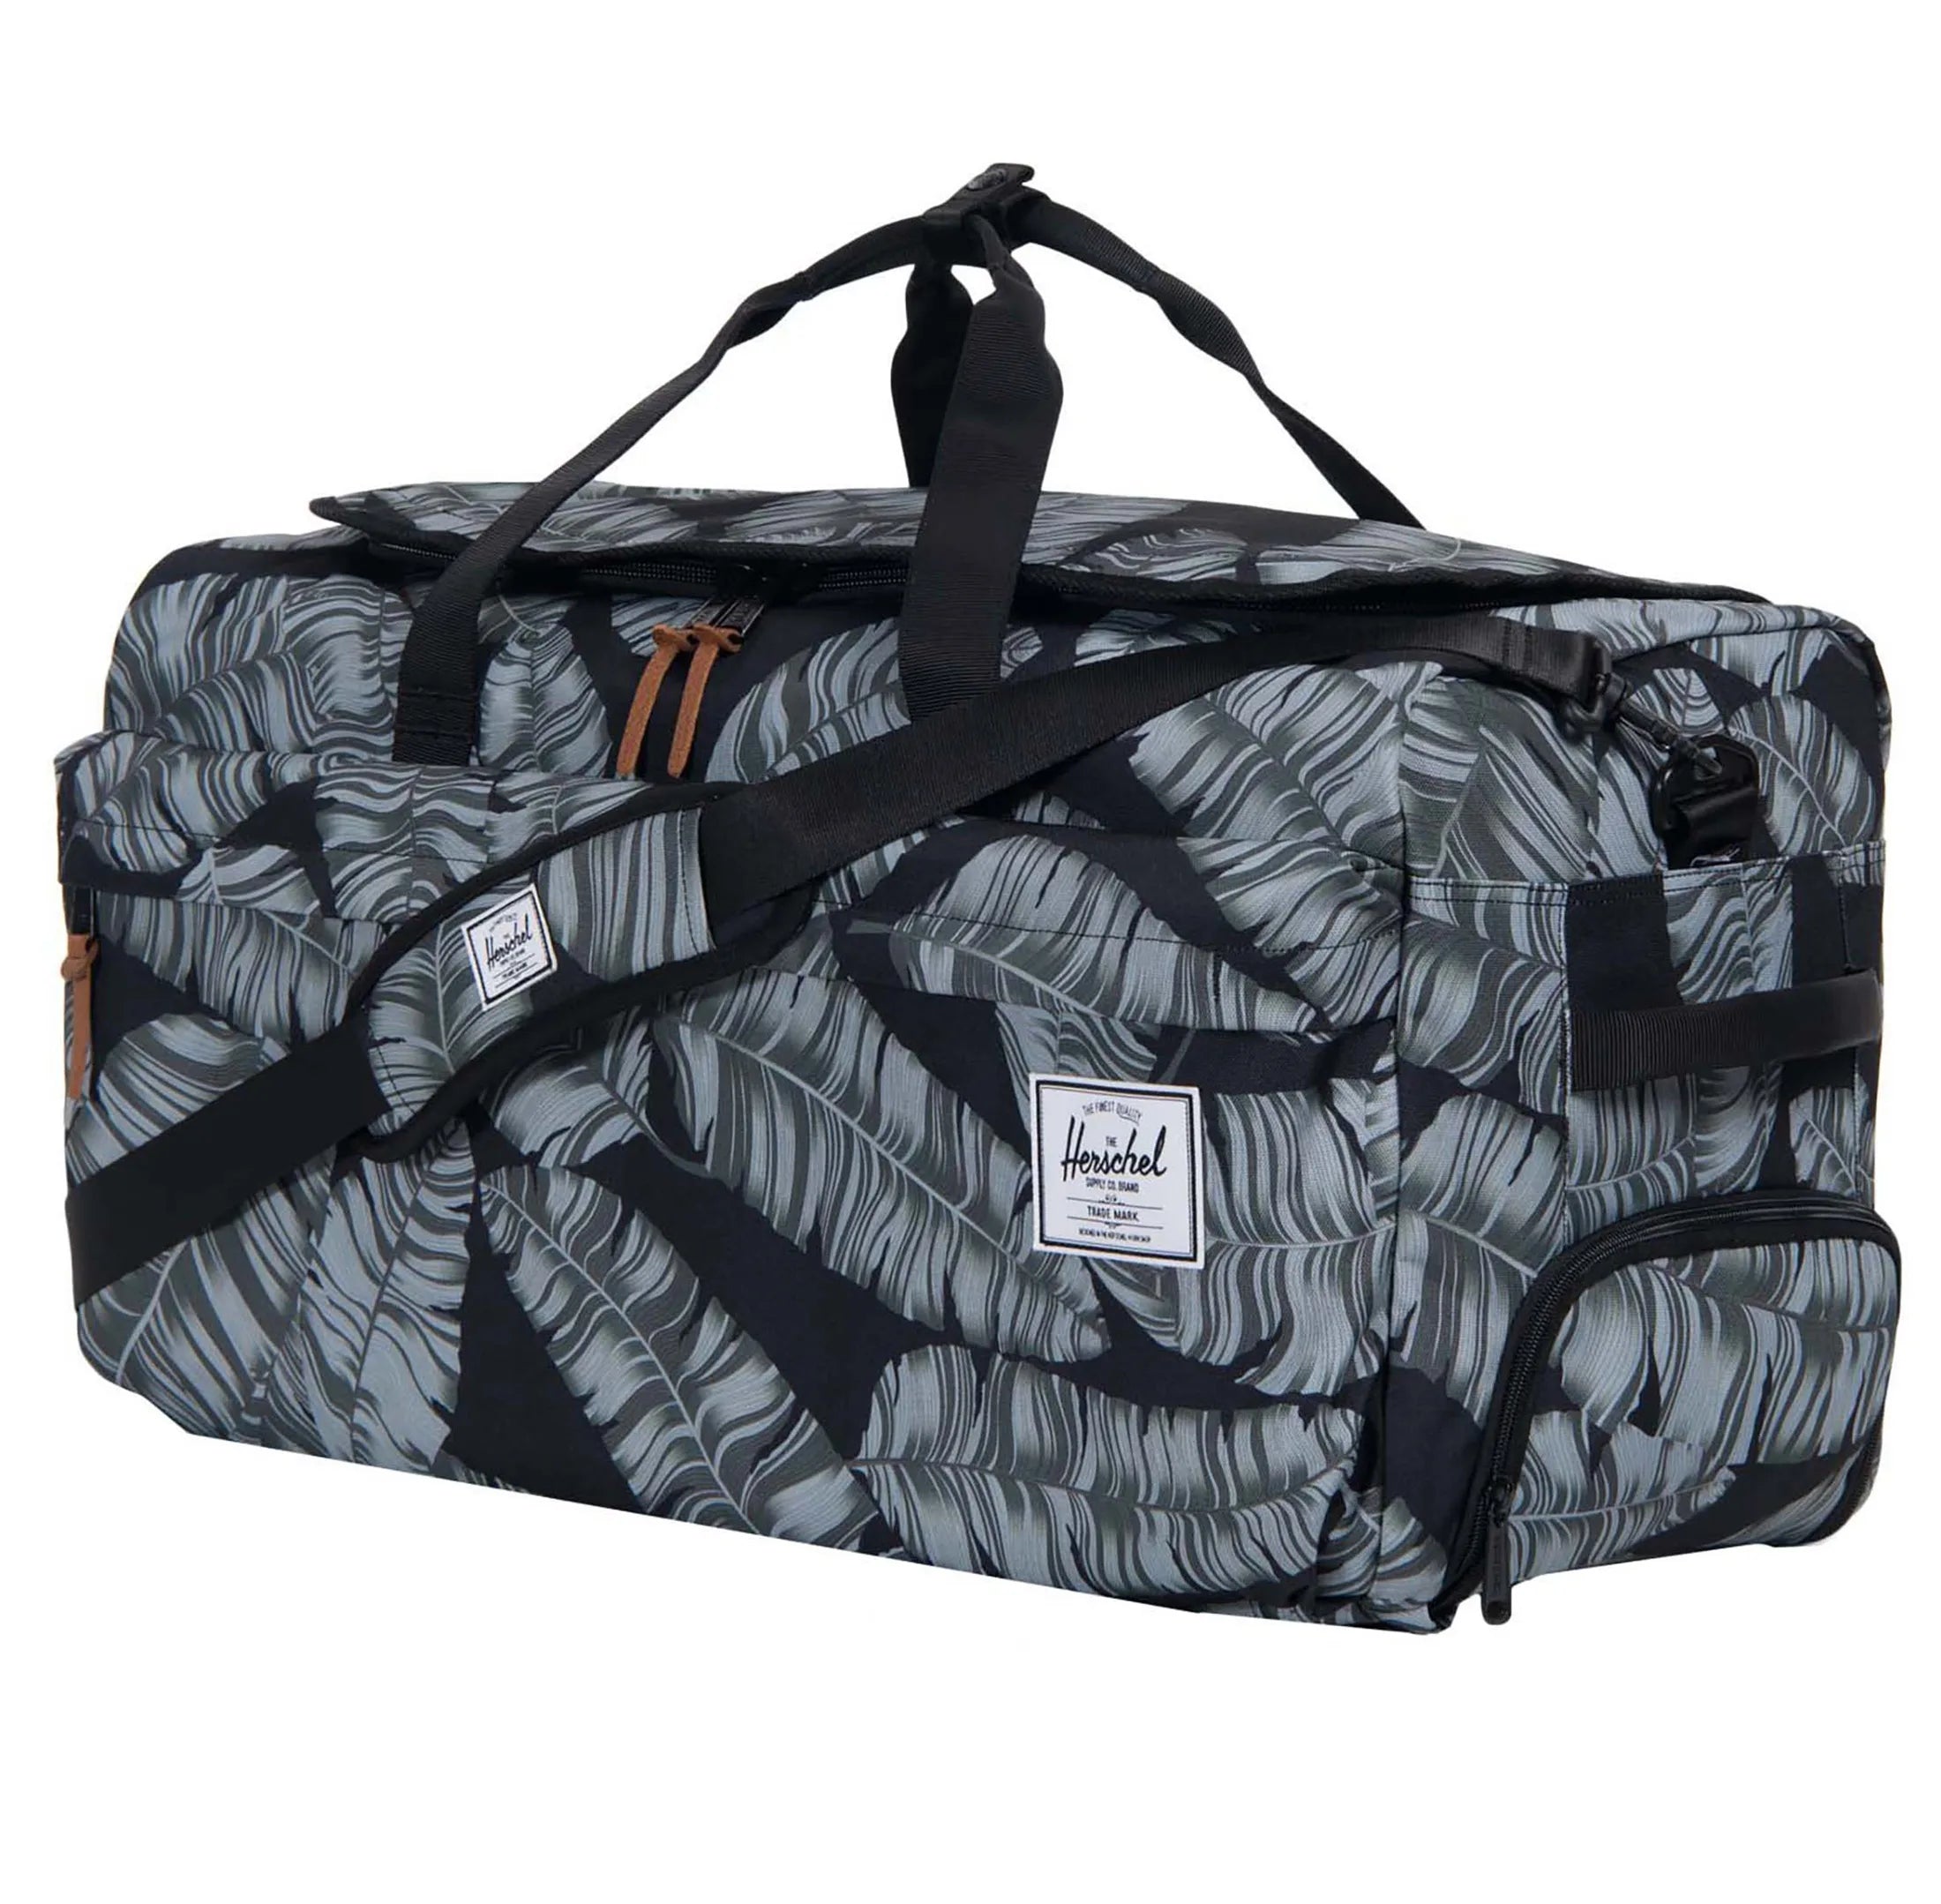 Herschel Travel Collection Outfitter Travel duffel bag 61 cm - black palm